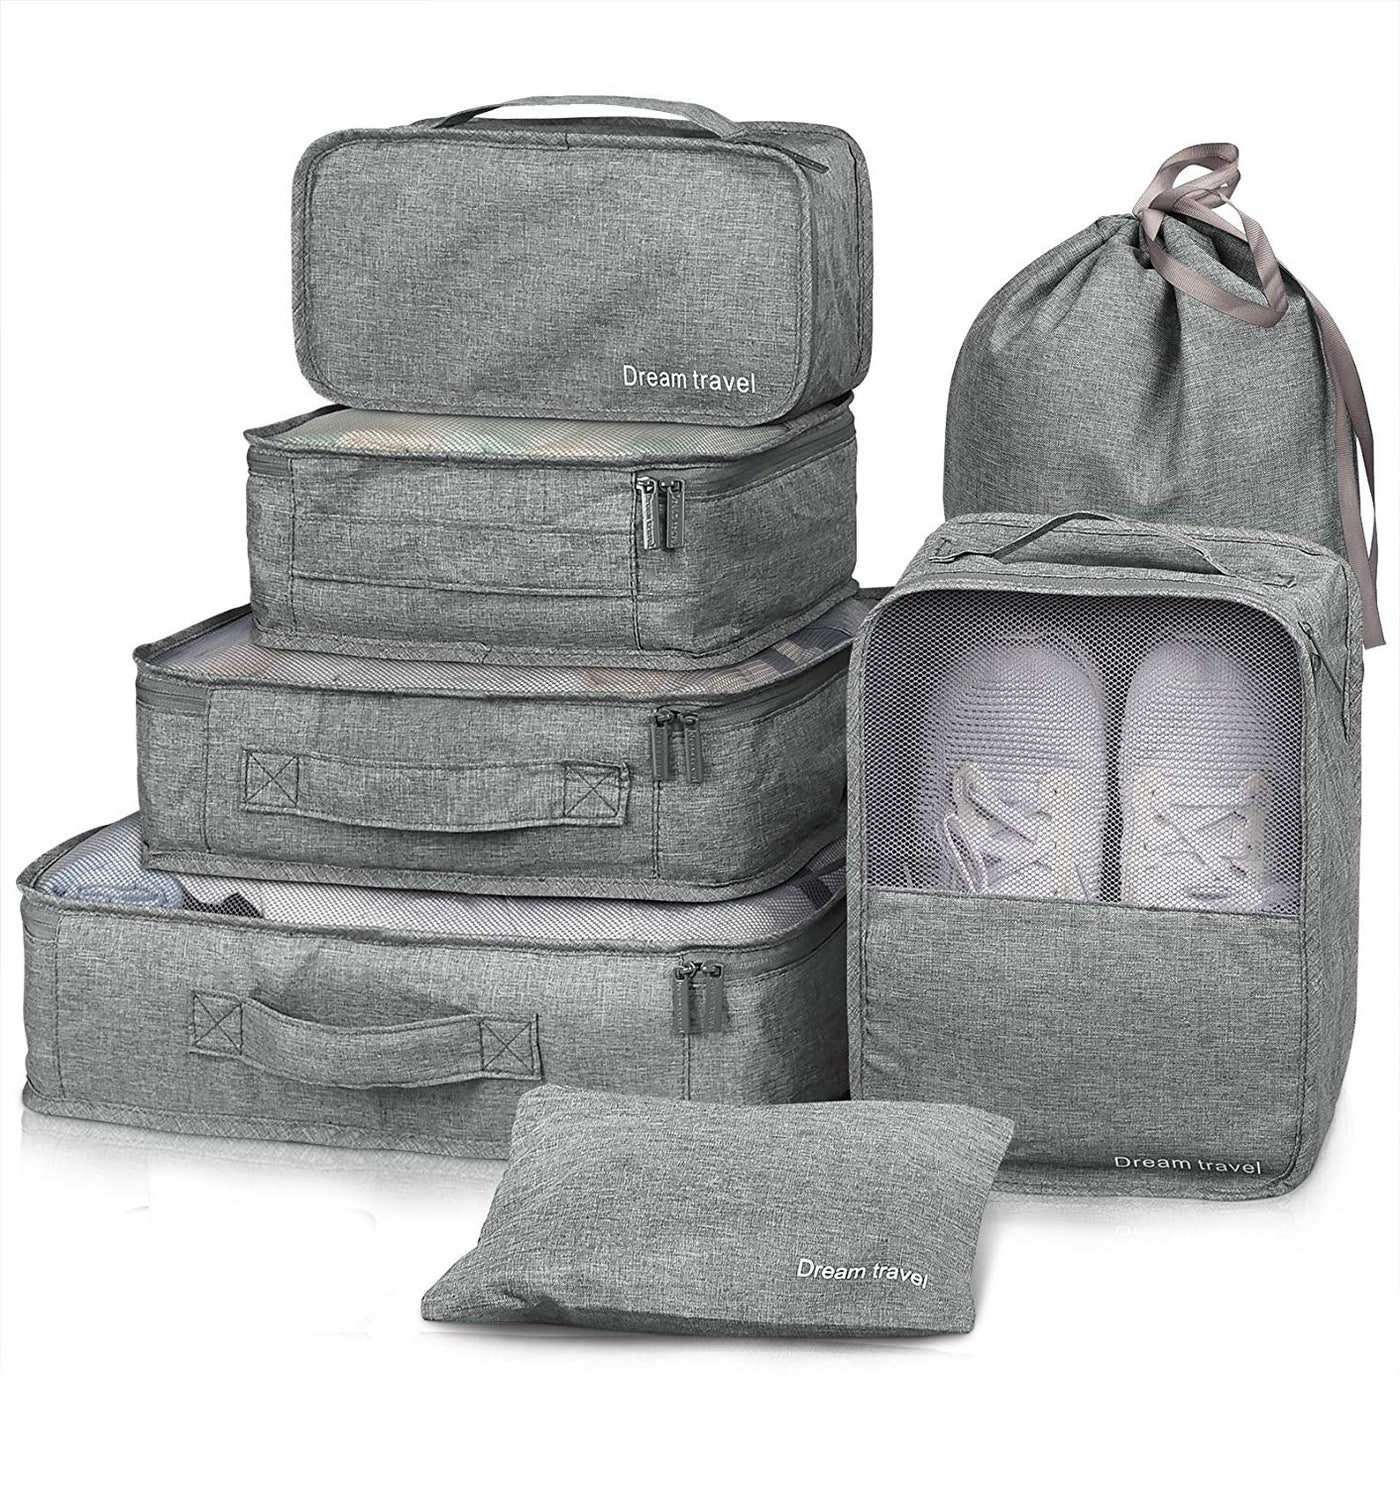 7pcs Packing Cubes Luggage Storage Suitcase Bags